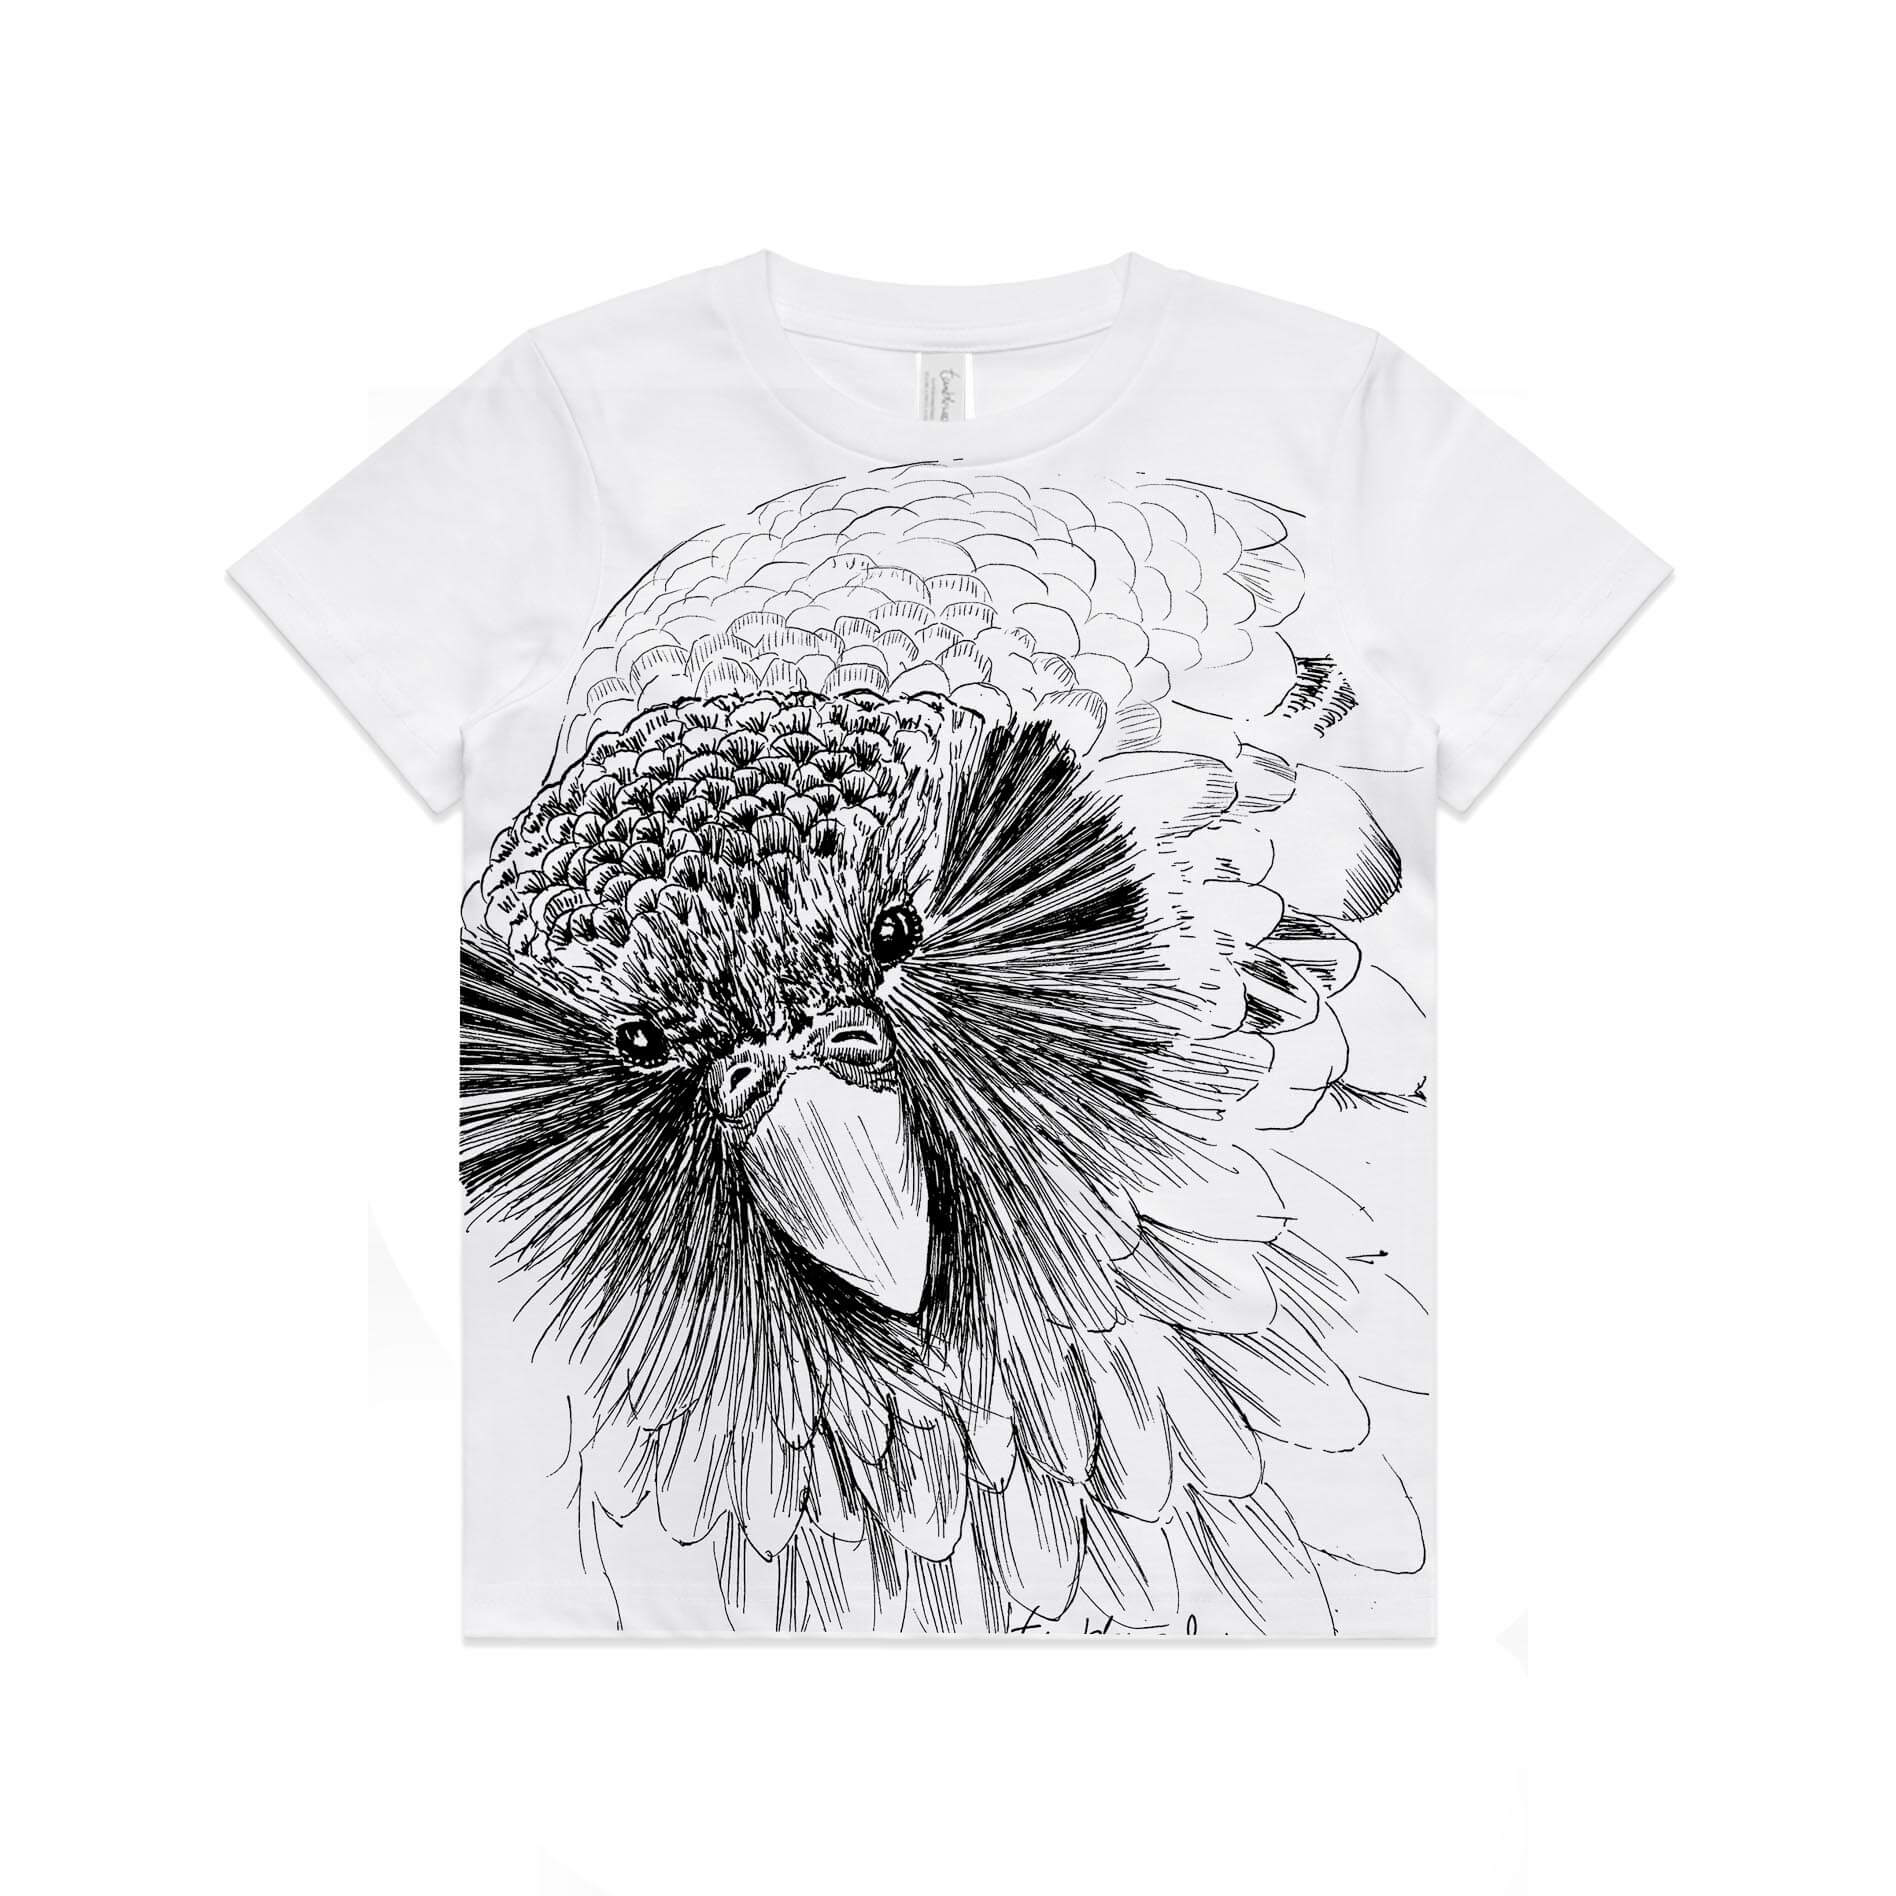 White, cotton kids' t-shirt with screen printed Sirocco the Kakapo design.